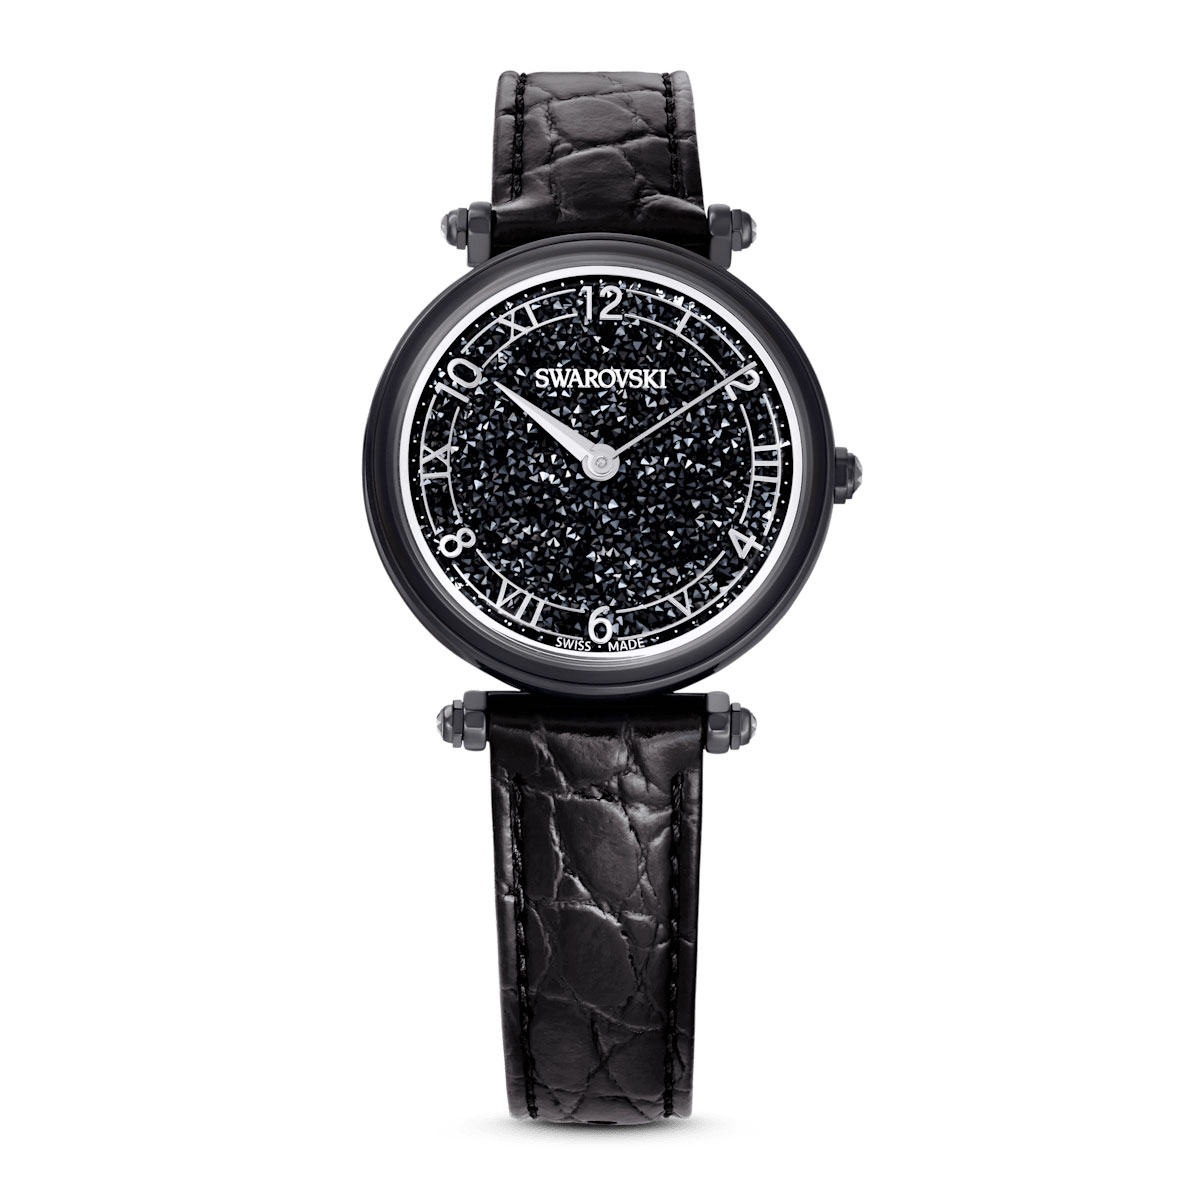 Swarovski Crystalline Wonder watch, Swiss Made, Leather strap, Black, Black finish